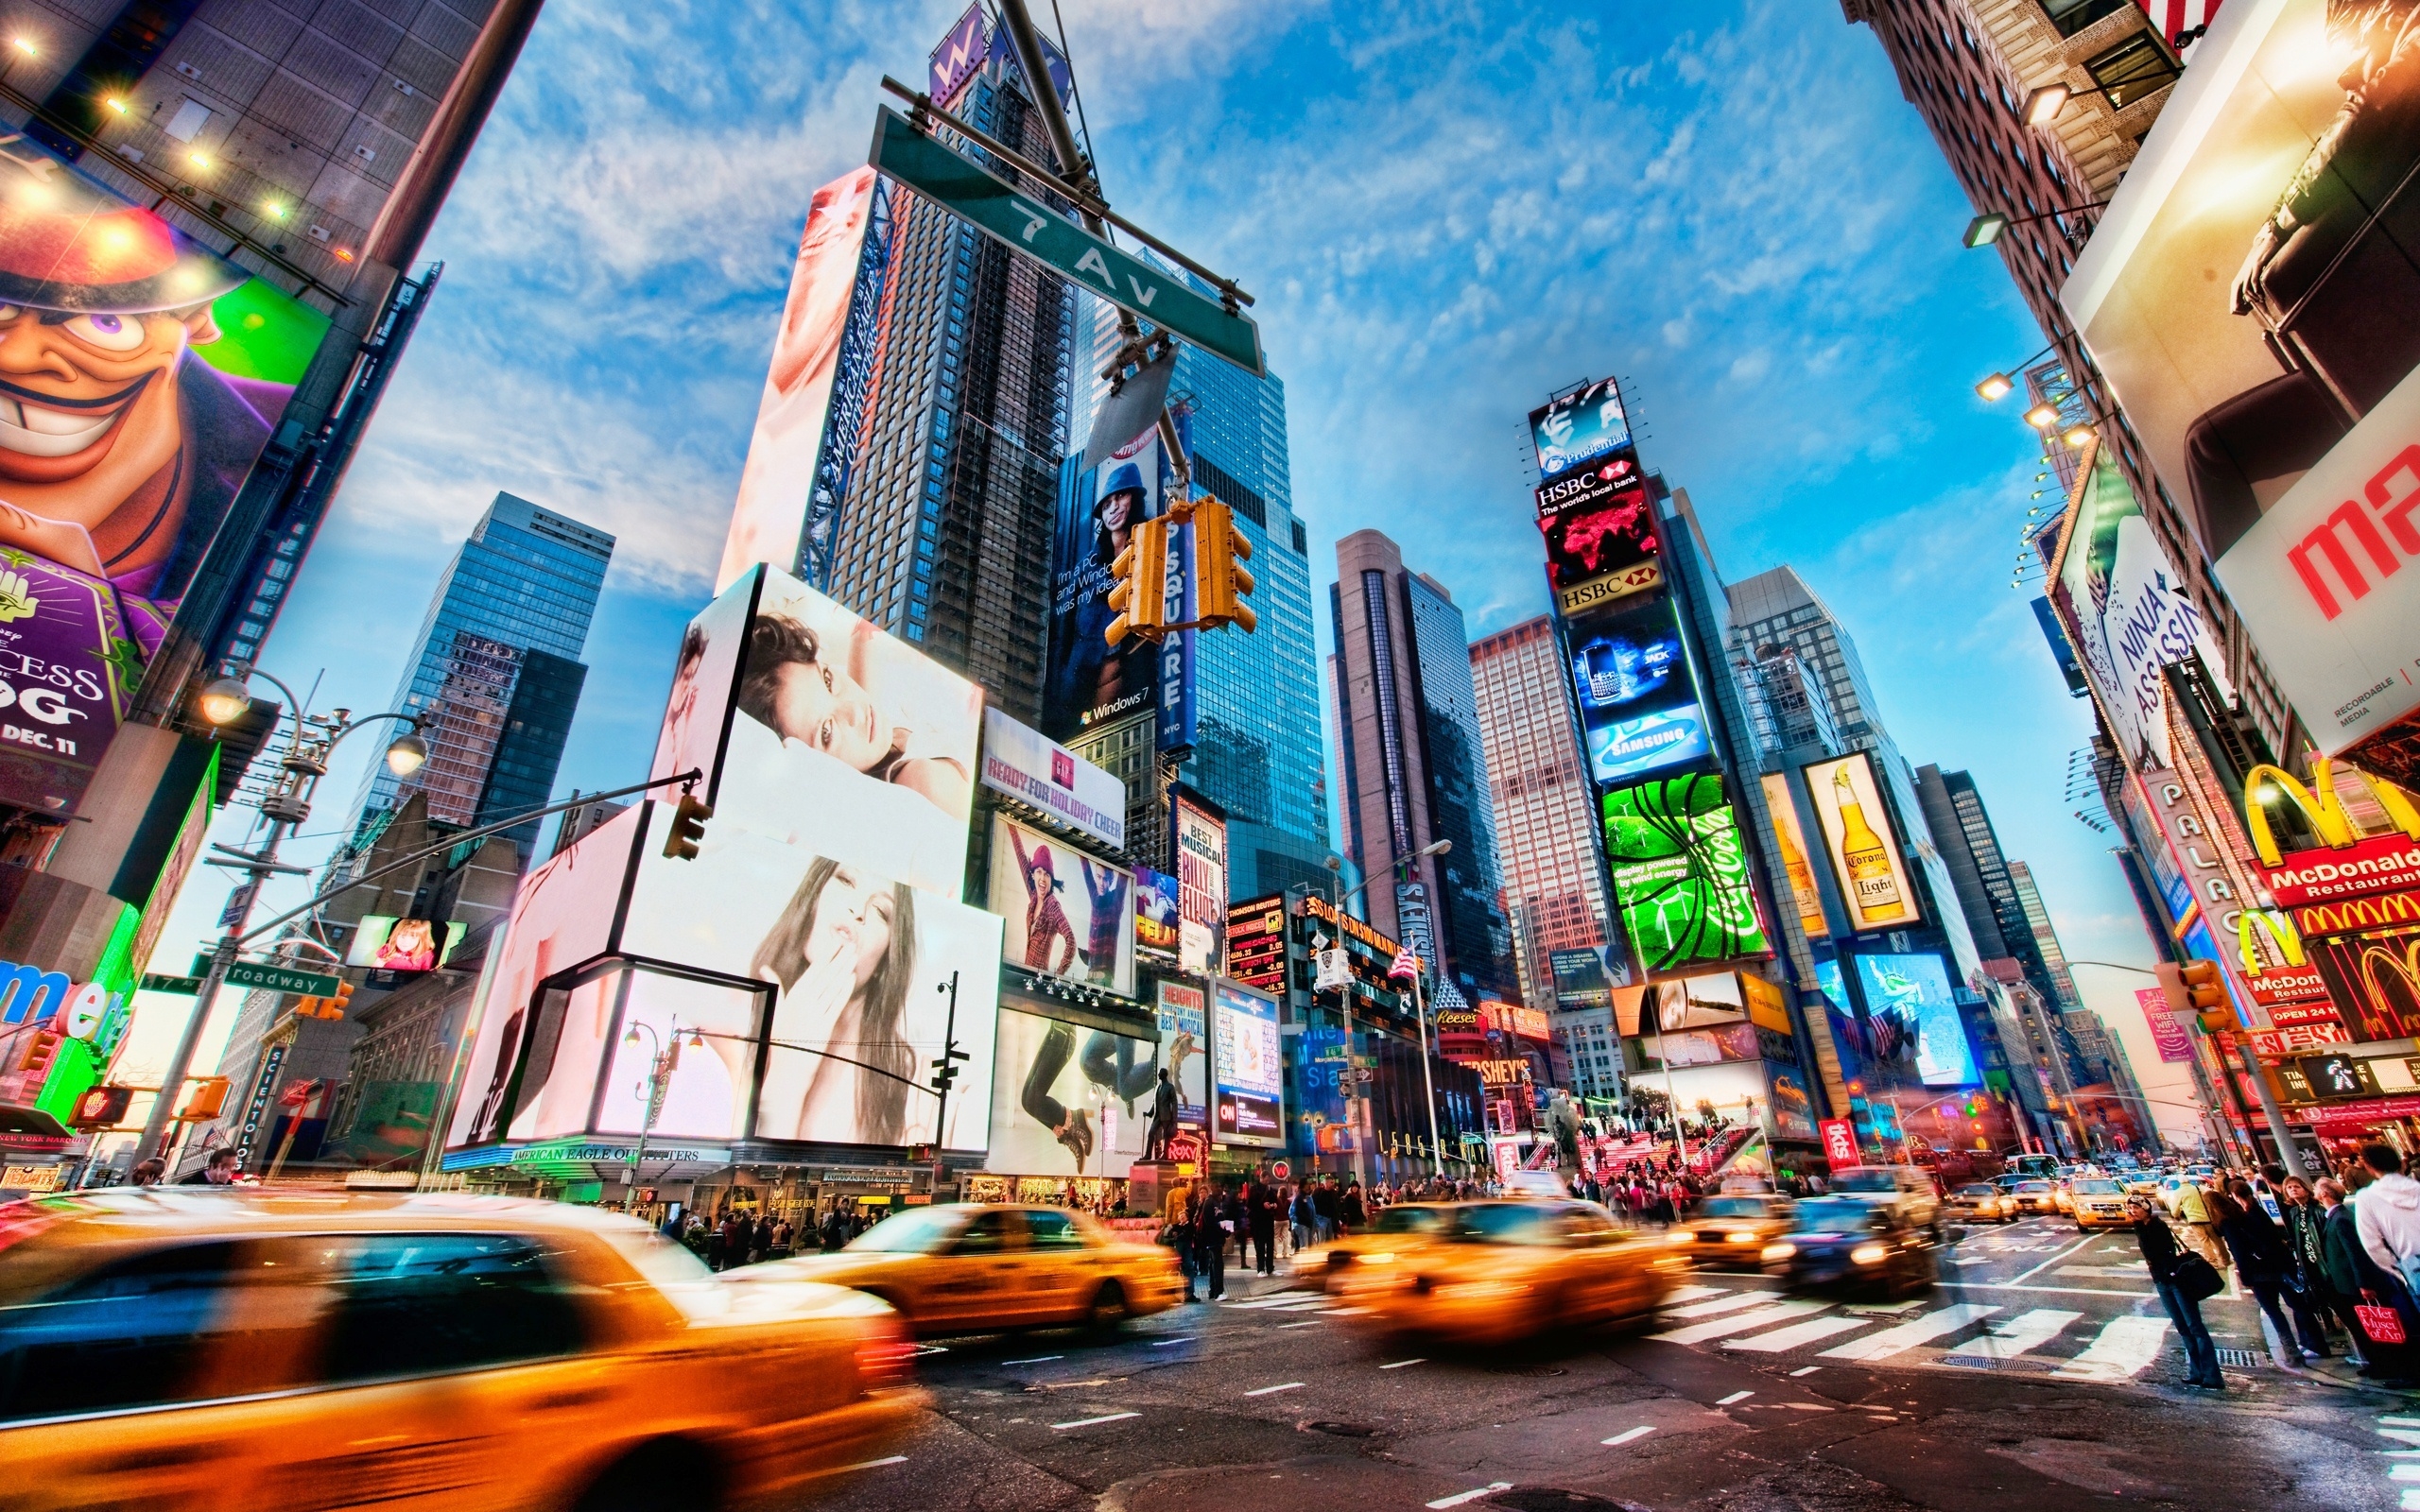 Times Square New York Mac Wallpaper Download | Free Mac Wallpapers ...